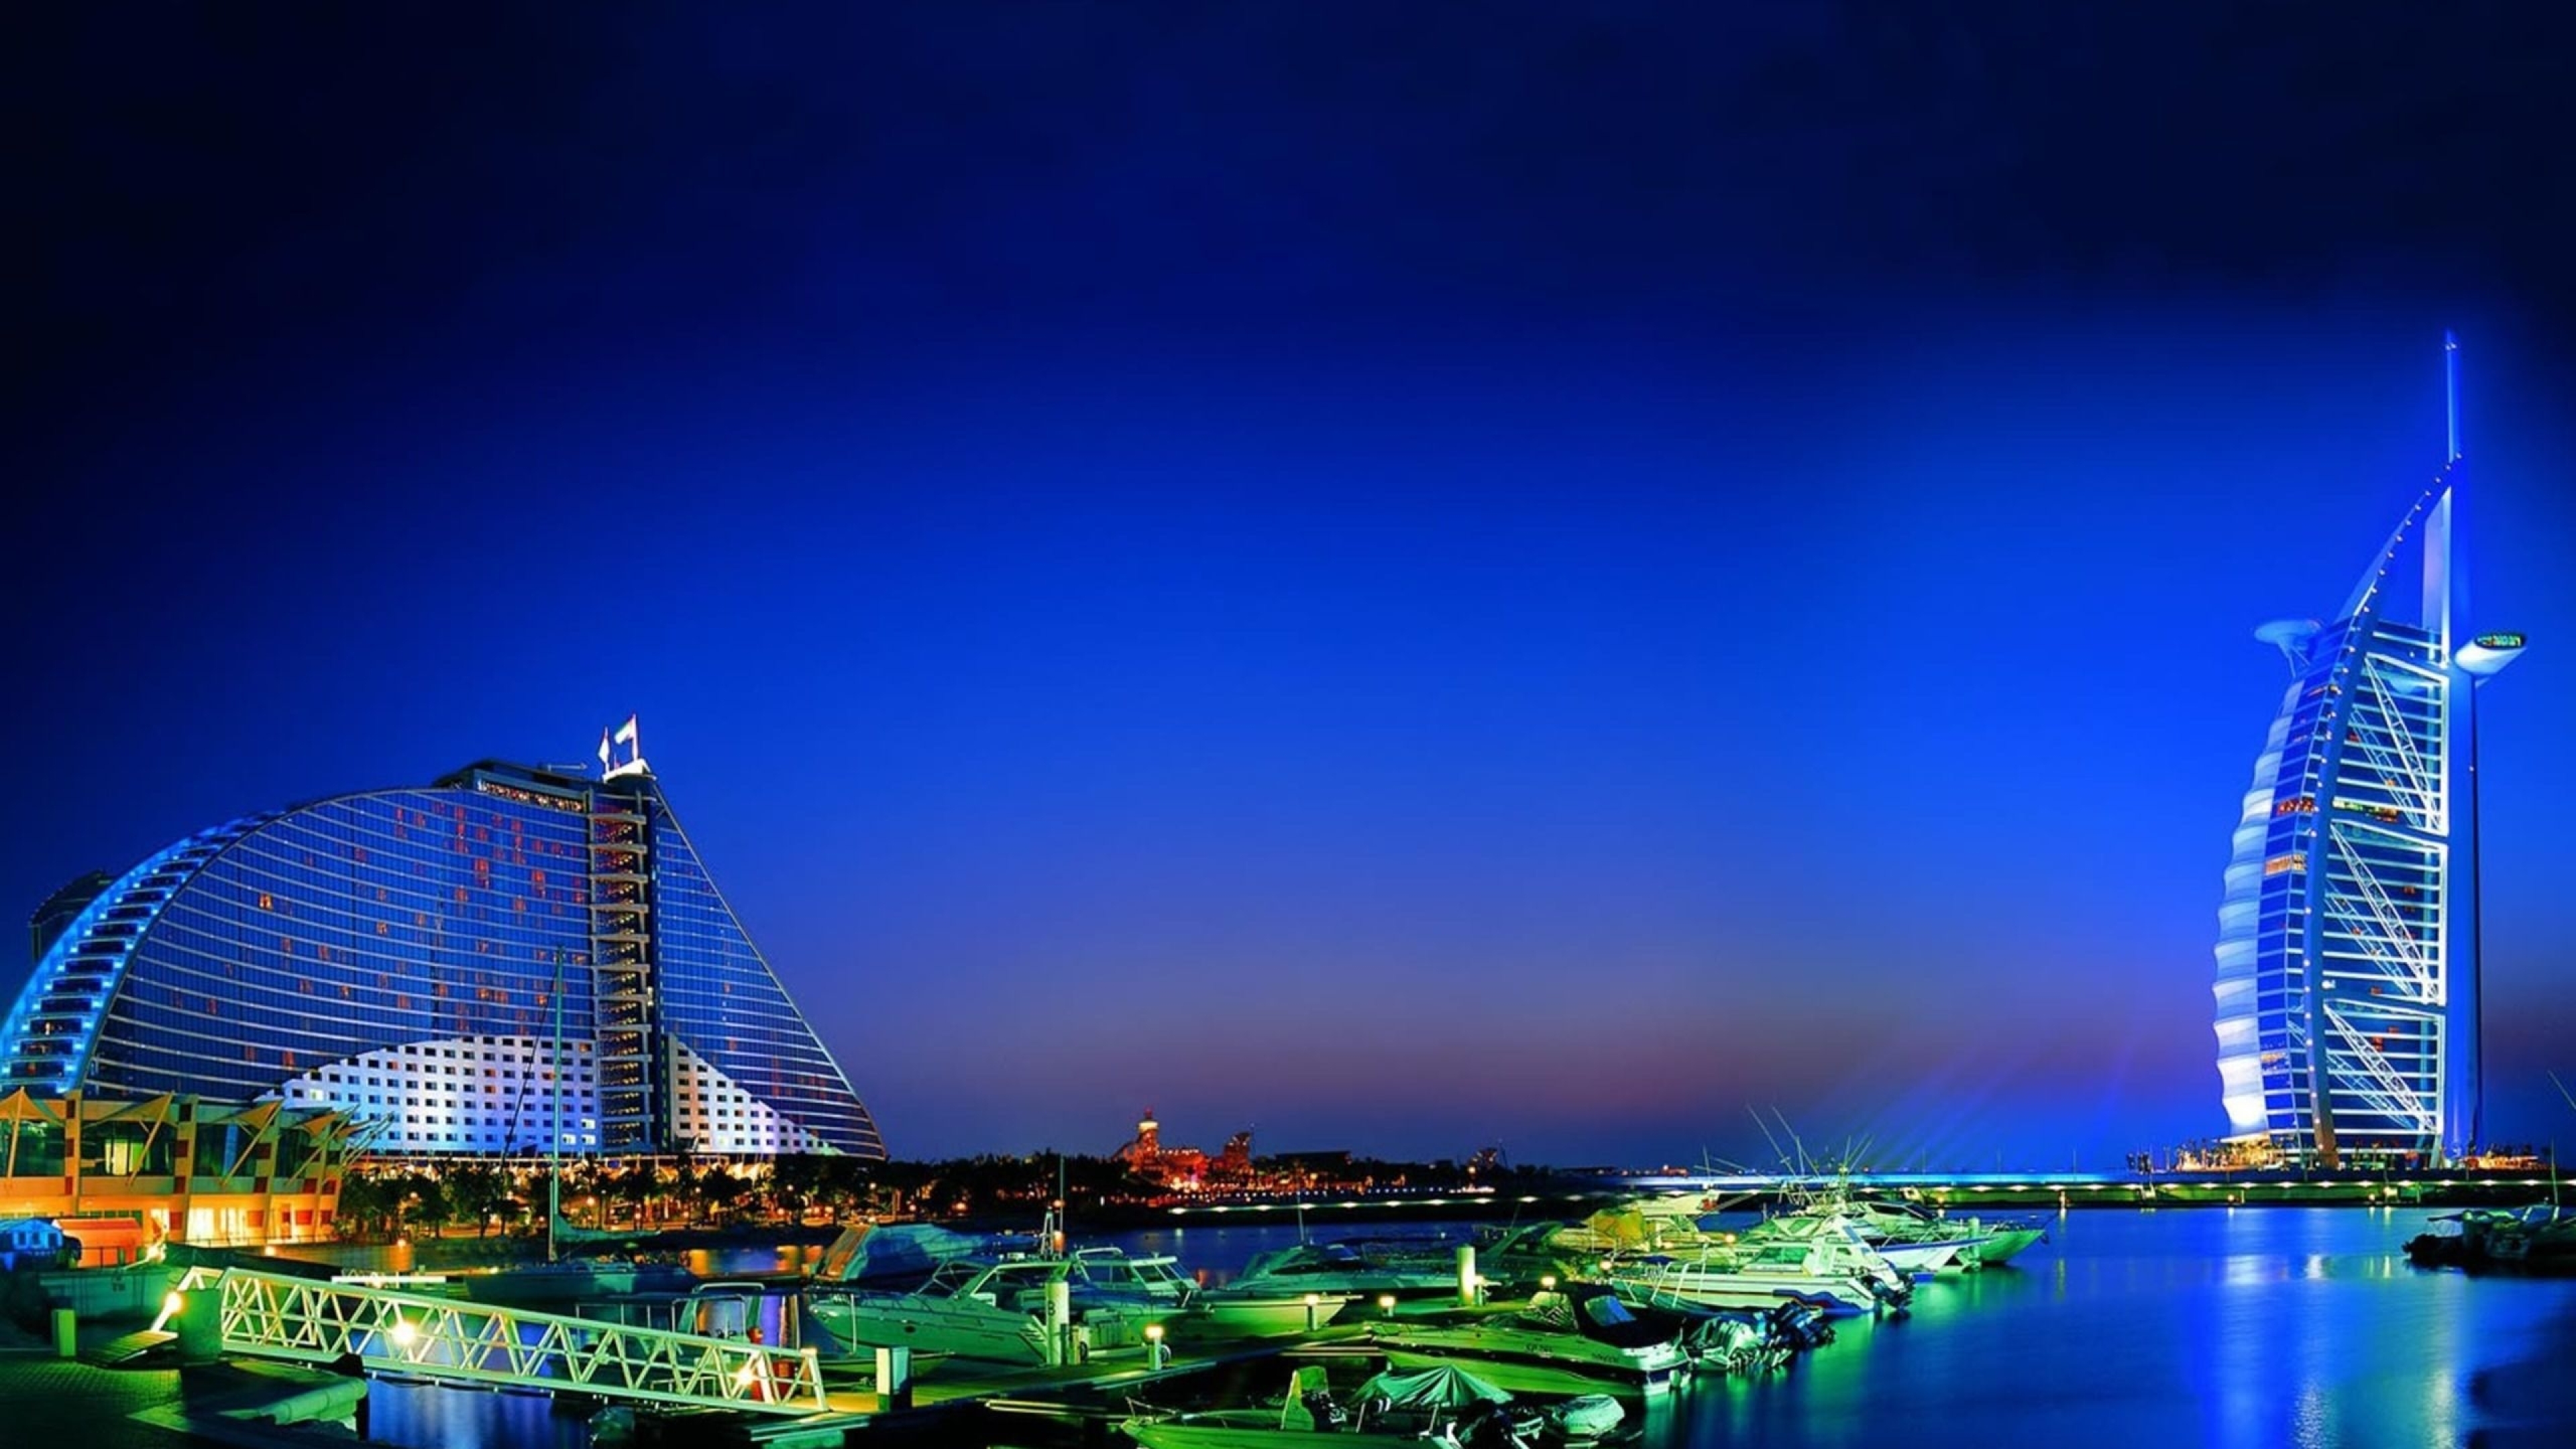 Burj Khalifa Dubai United Arab Emirates 4K wallpaper download